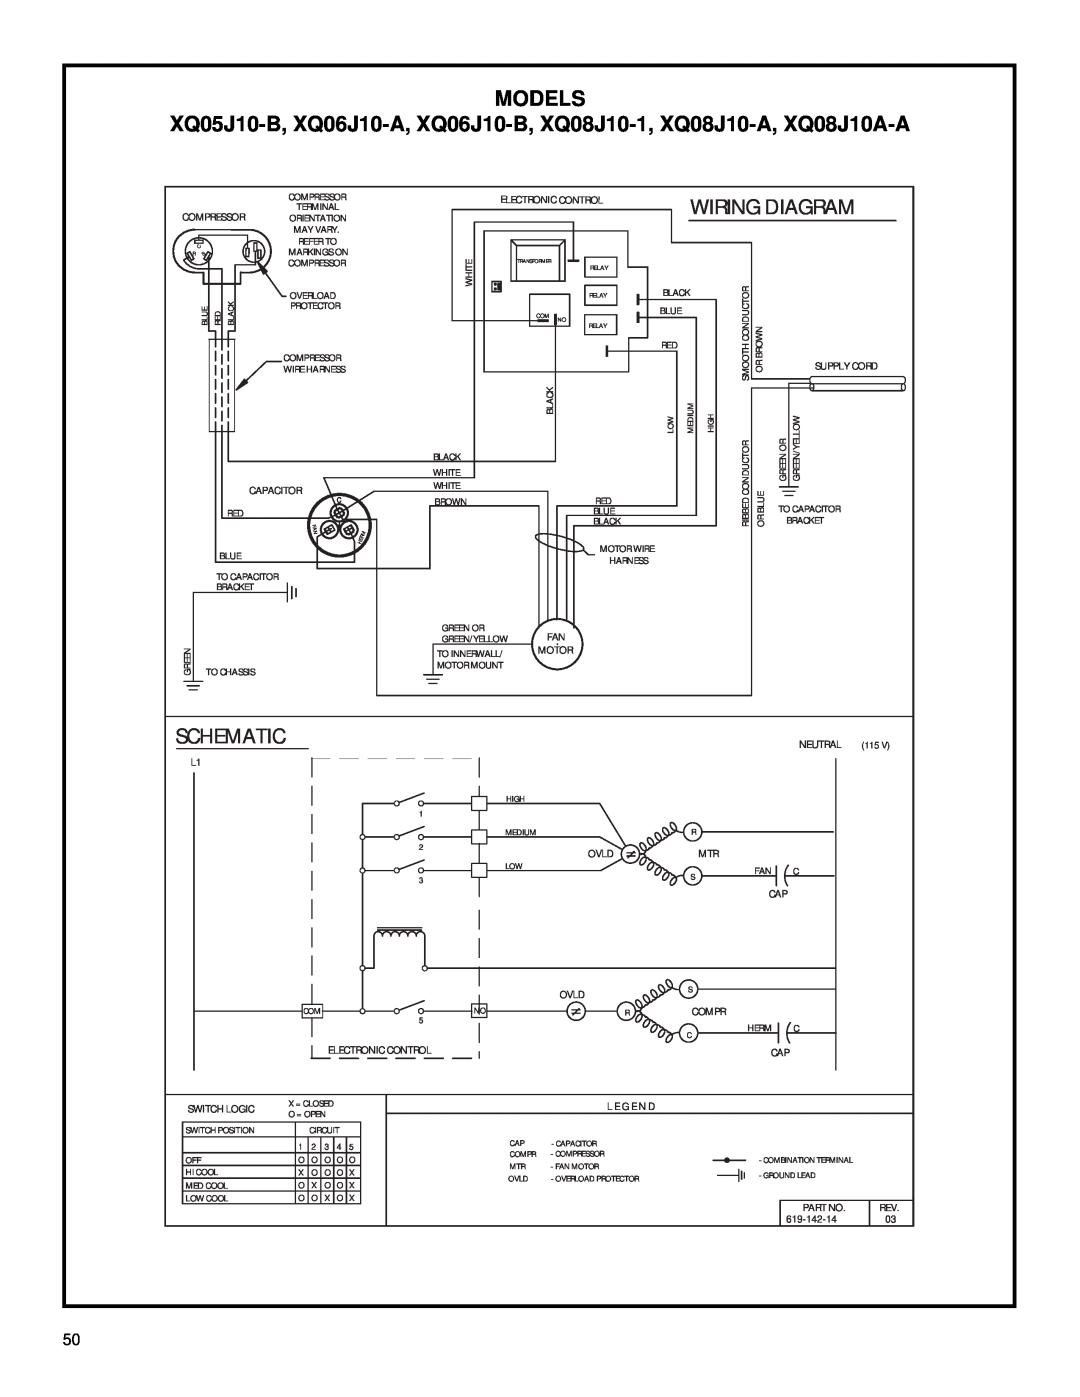 Friedrich racservmn service manual Schematic, Models, Wiring Diagram 